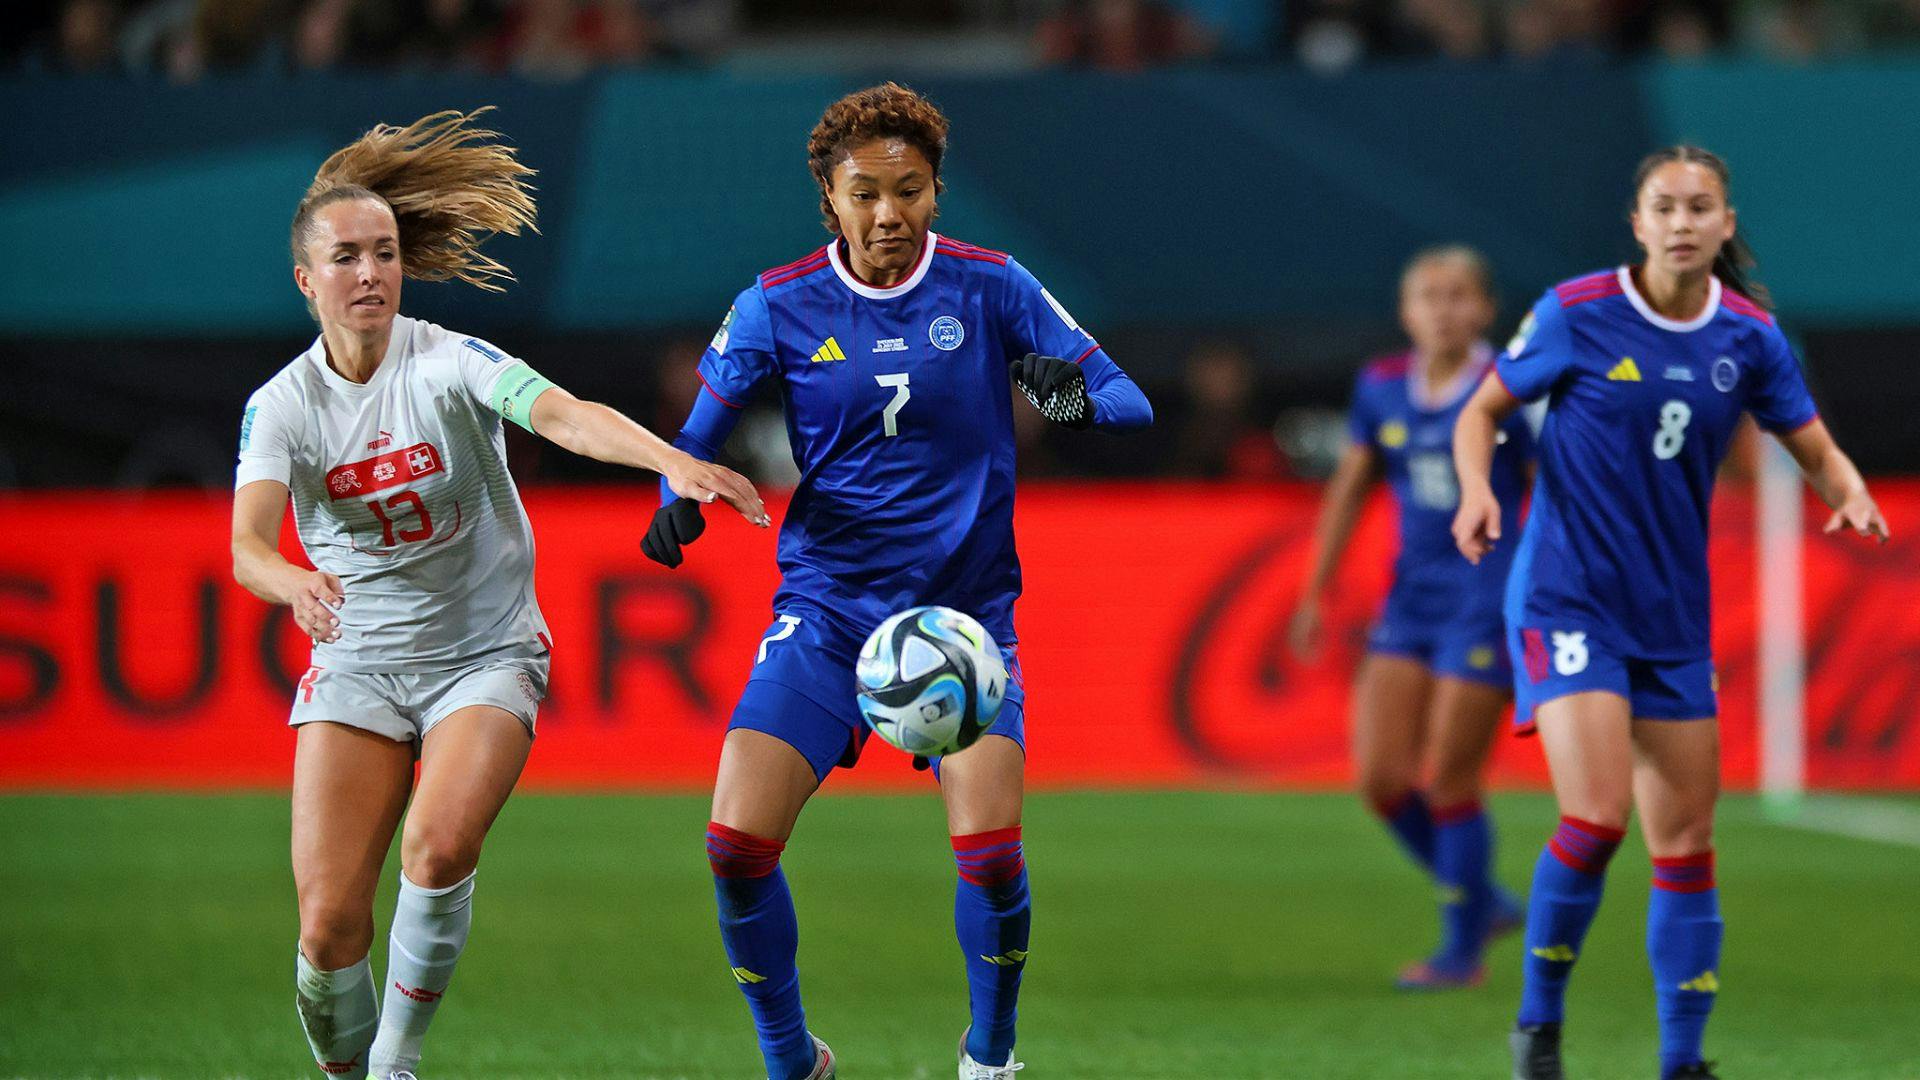 Alen Stajcic lauds Filipinas’ display of true heart in FIFA Women’s World Cup debut